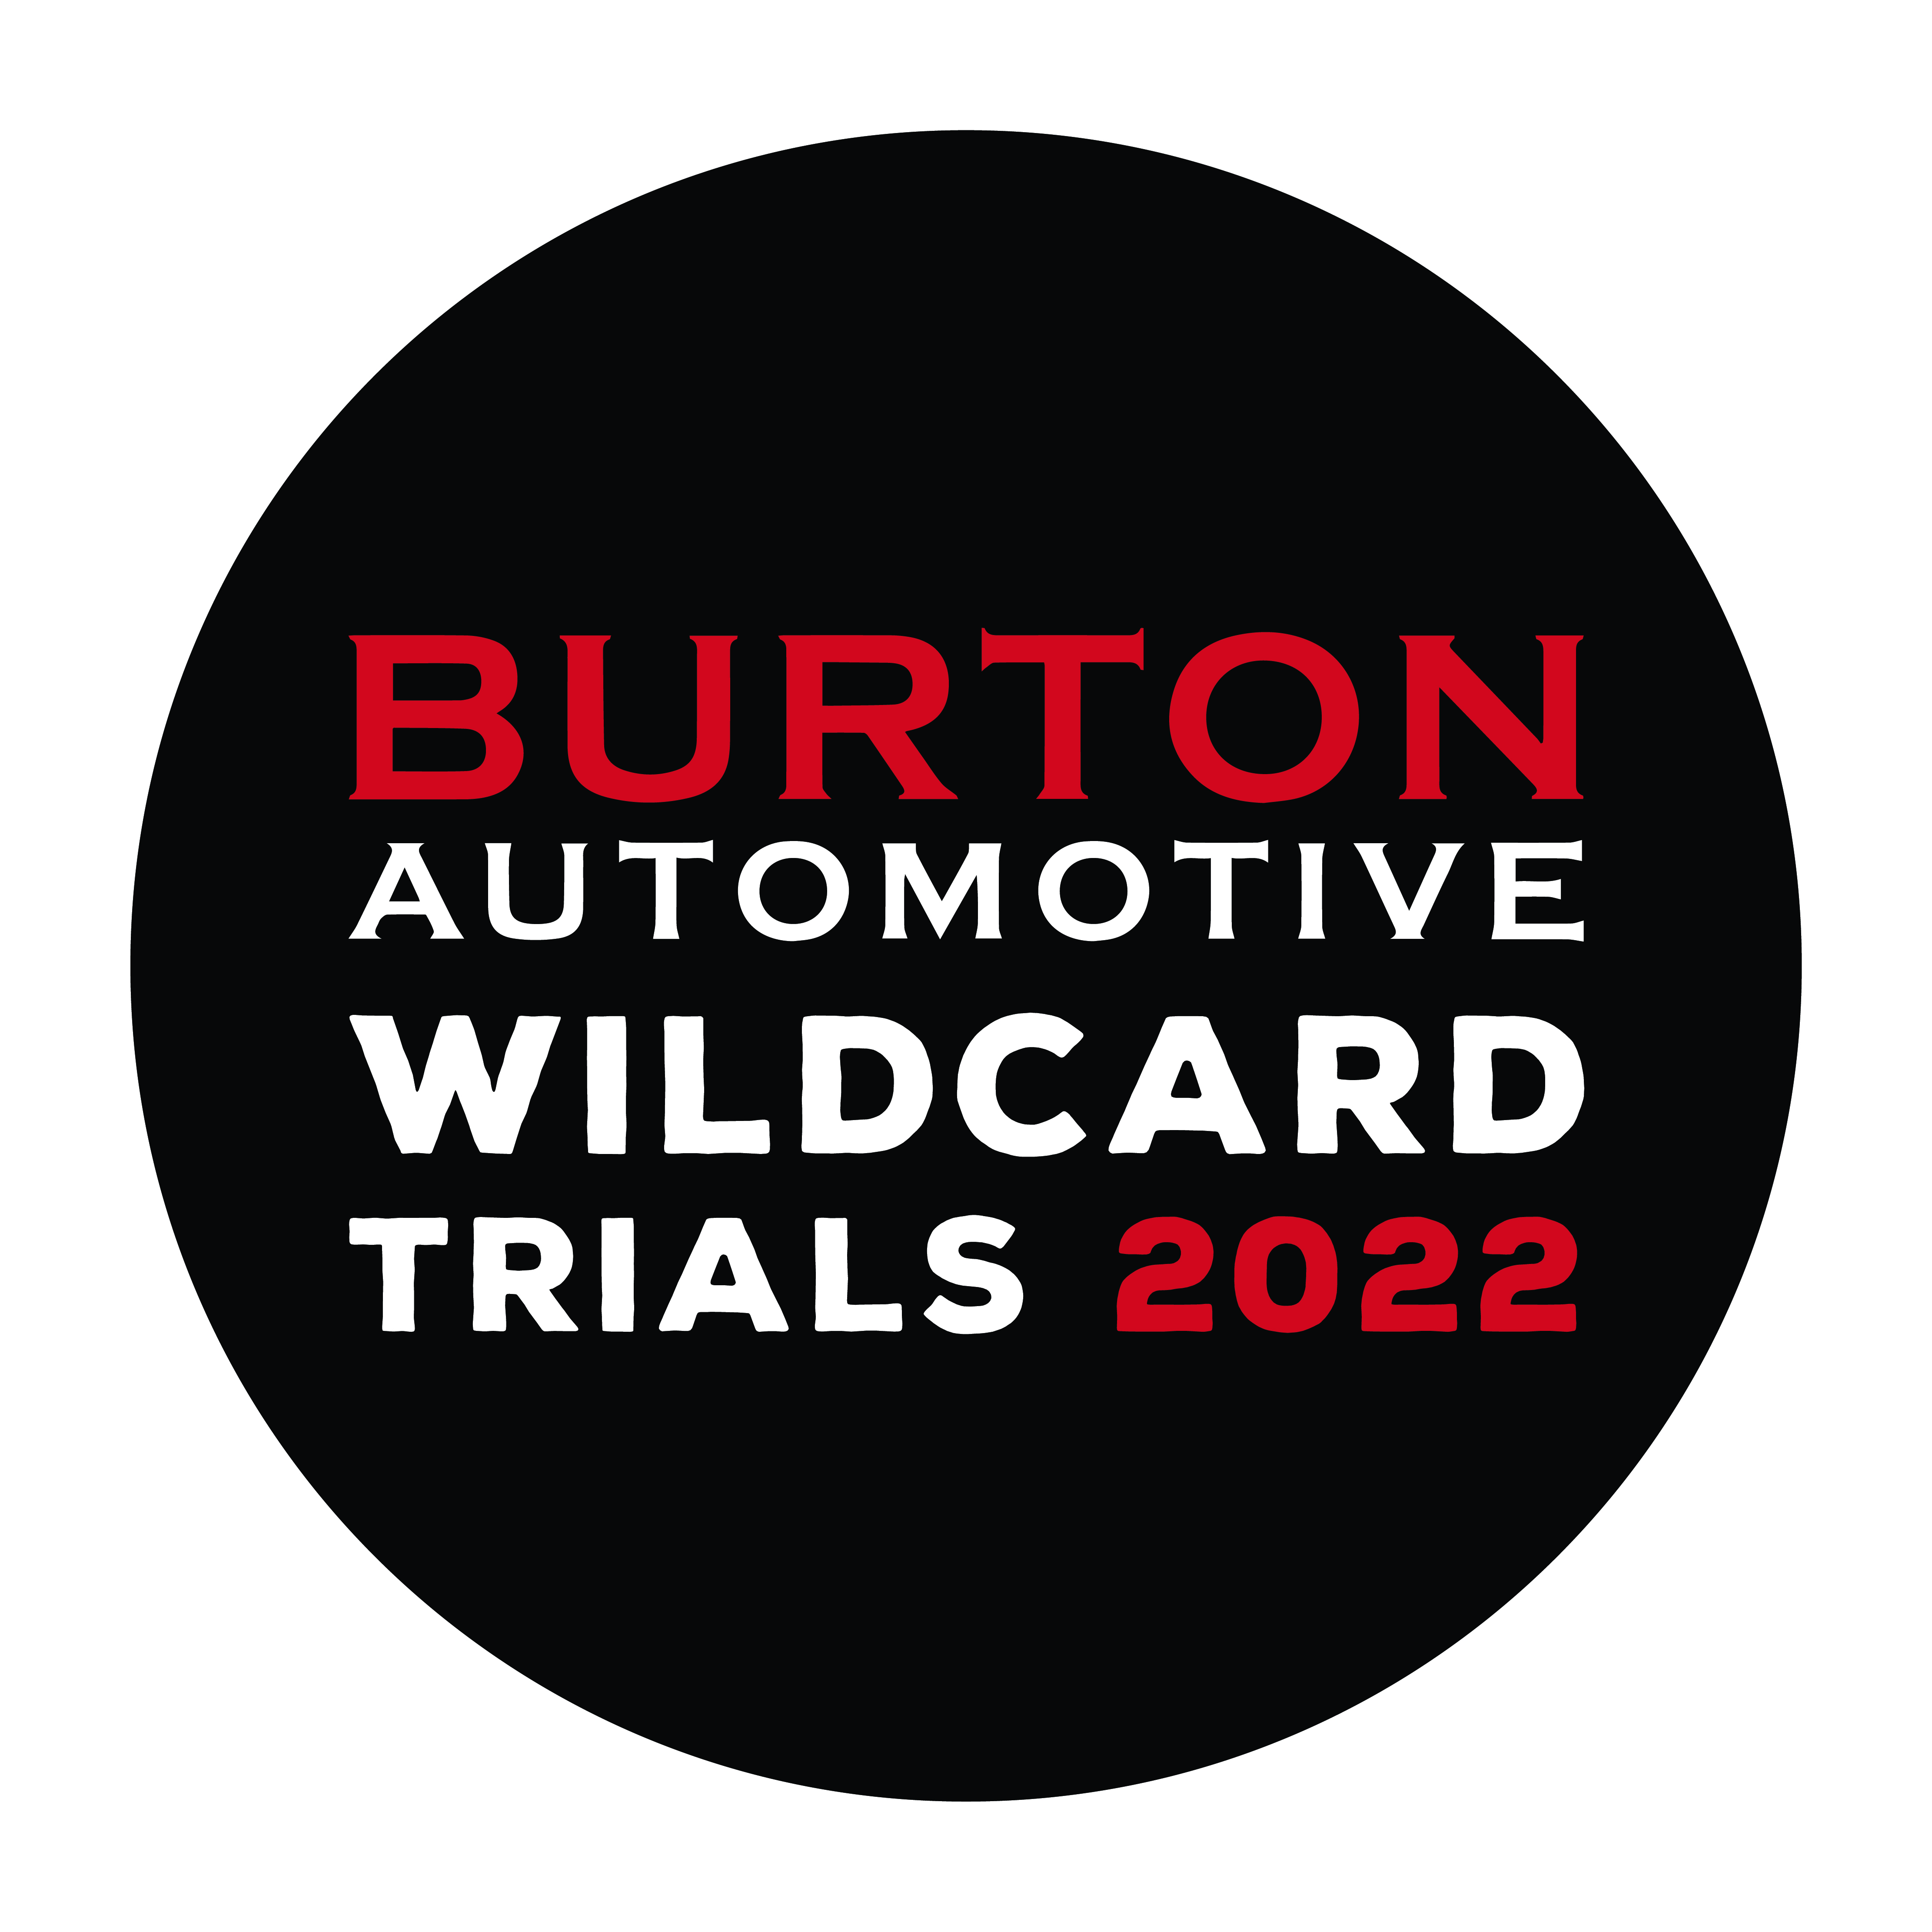 Burton Automotive Wildcard Trials 2022